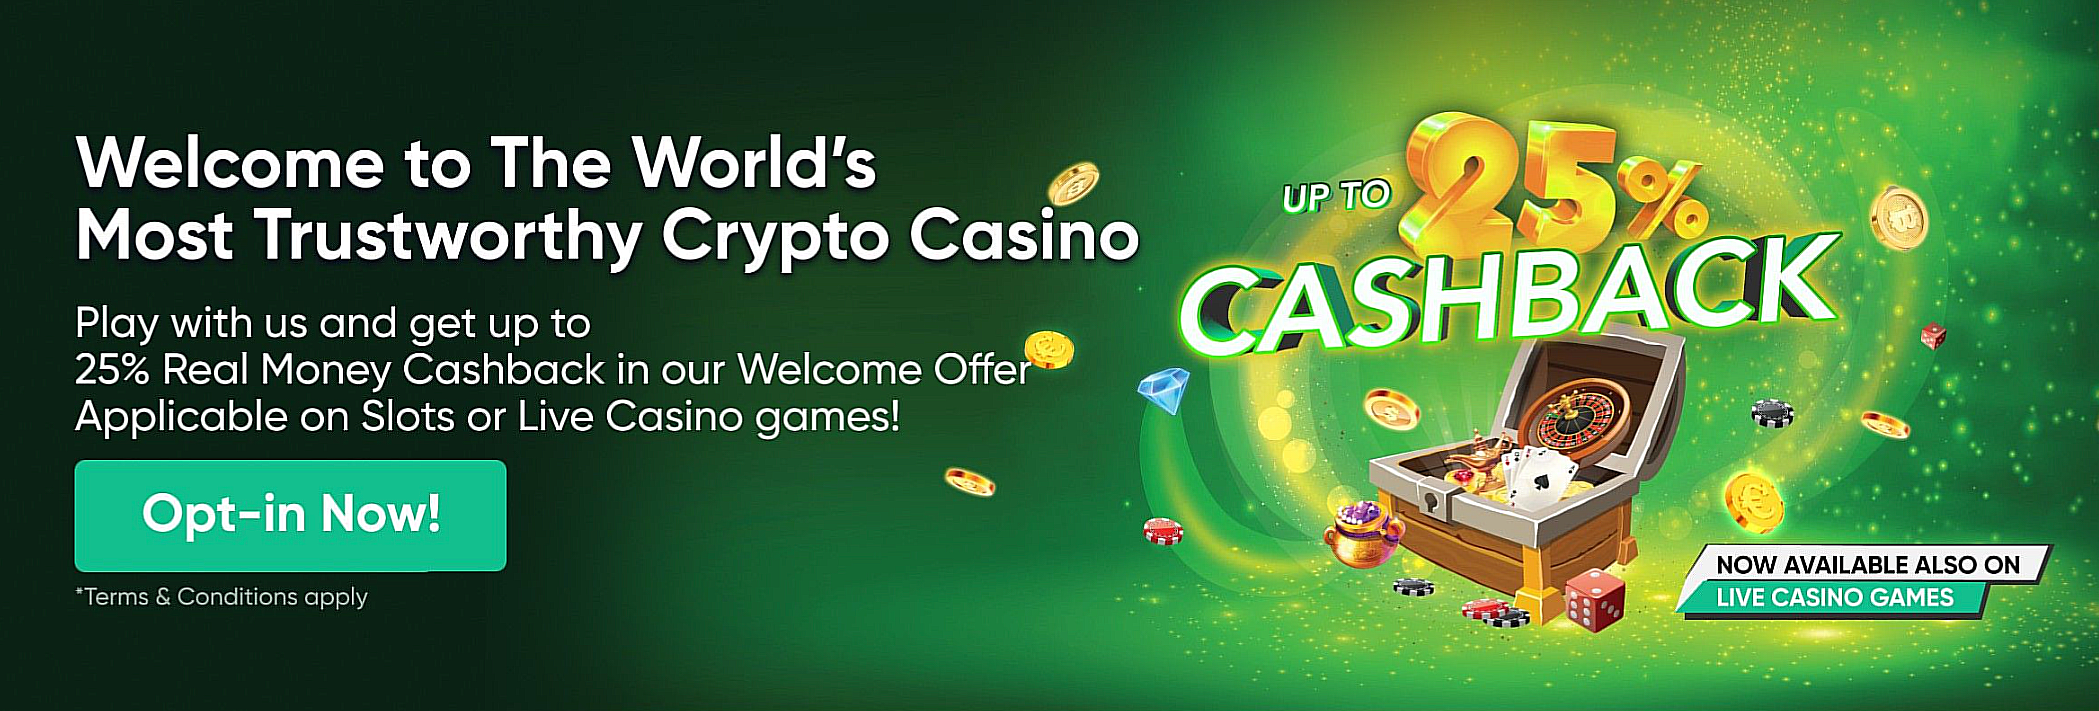 Top 10 Bitcoin Games Casino Online Bonuses